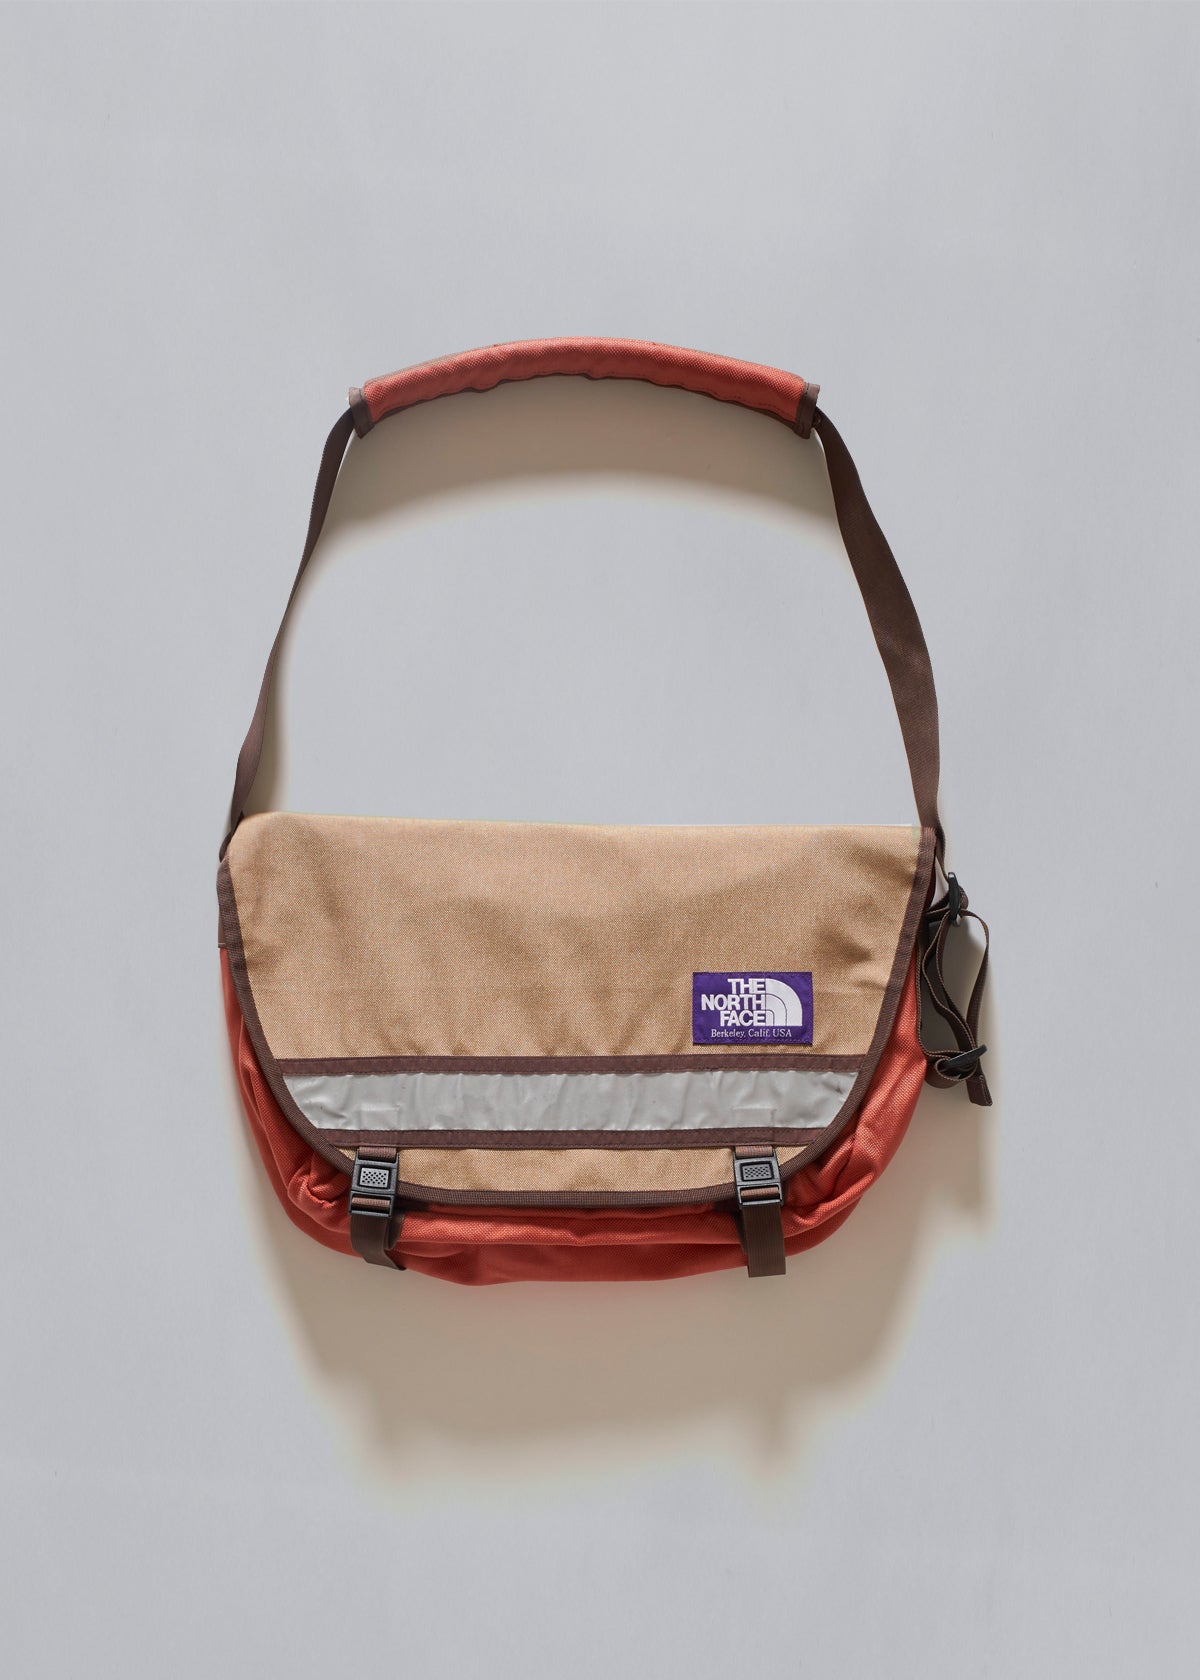 Nylon Messenger Bag AW2009 - The Archivist Store